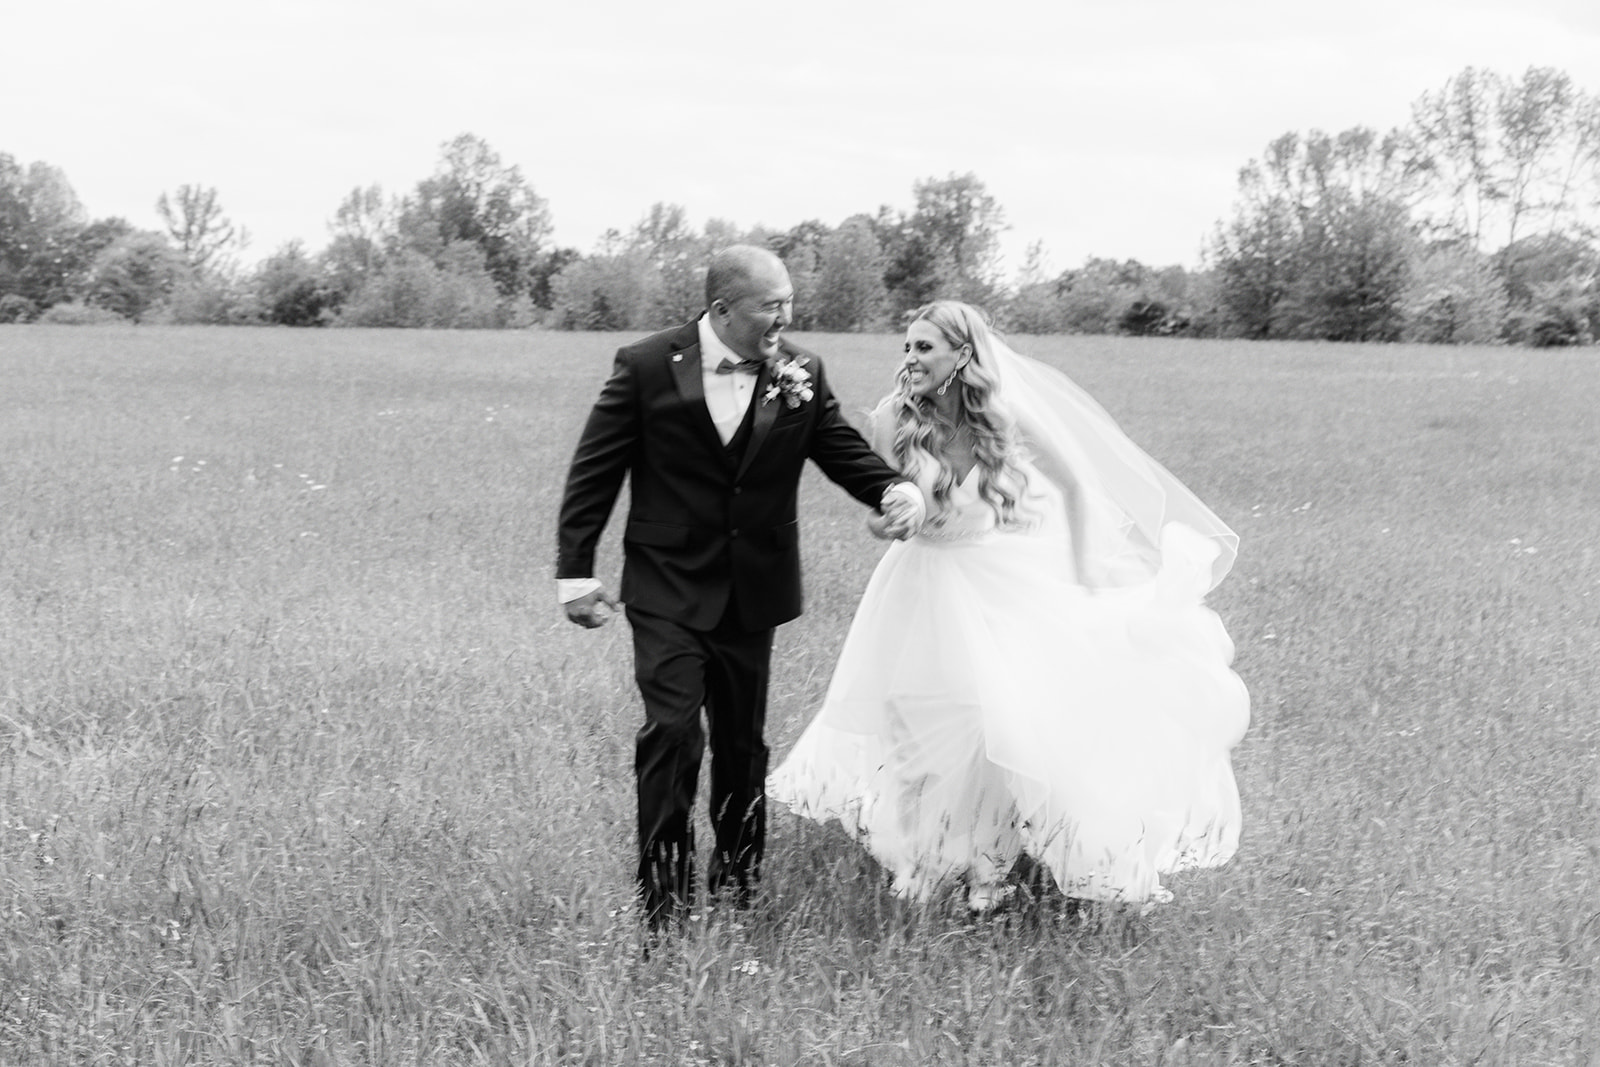 The bride and groom run through an open field in Mentone, Alabama